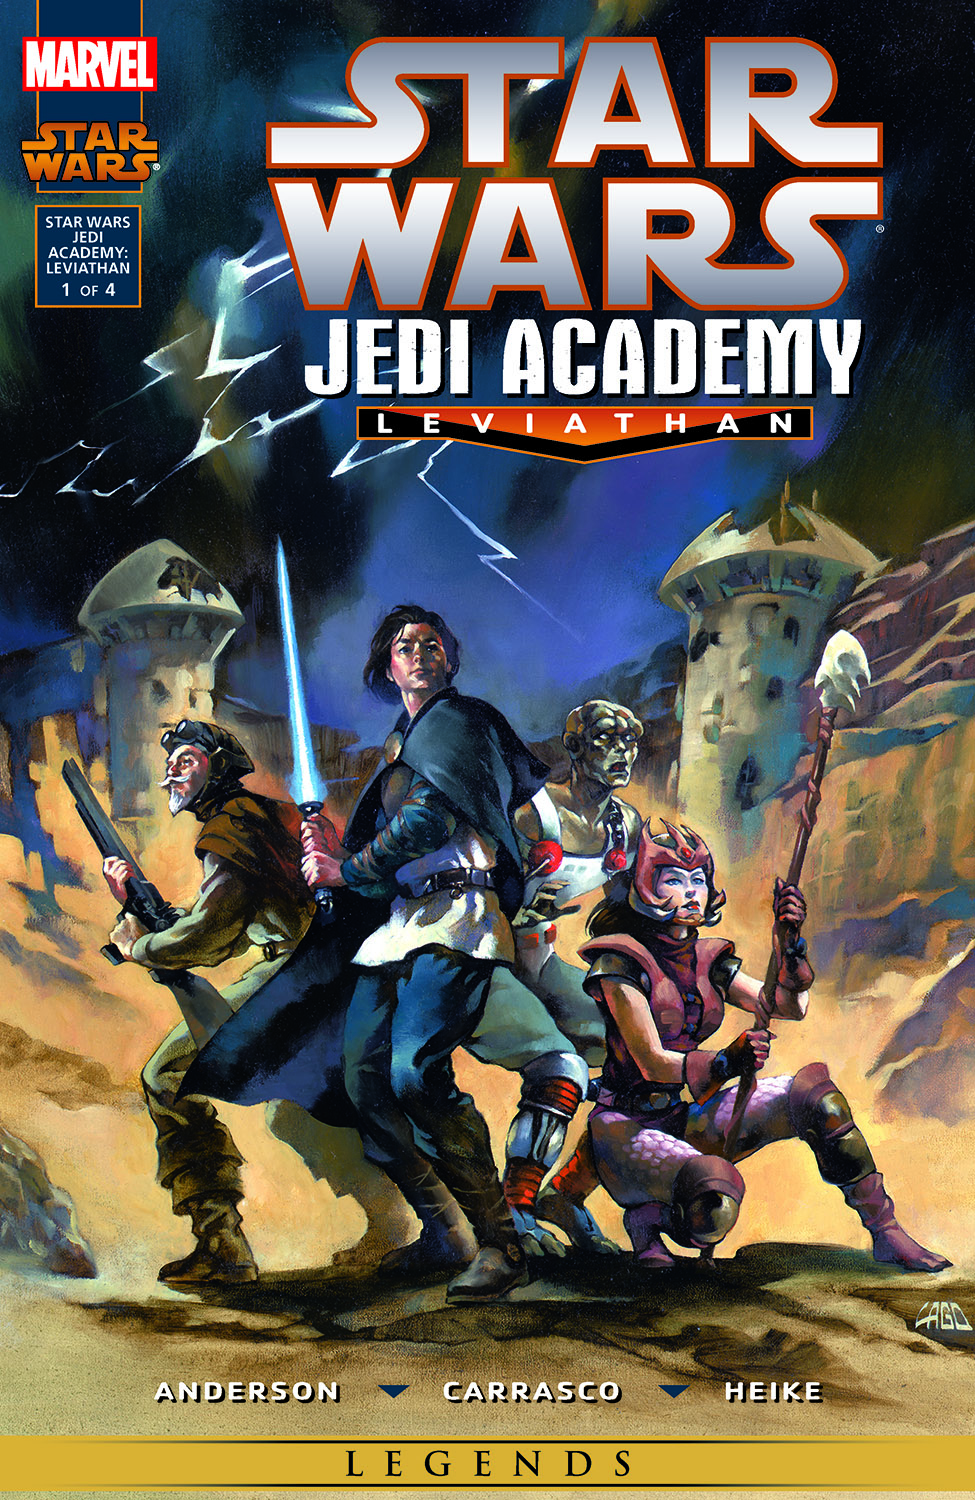 Star Wars: Jedi Academy - Leviathan (1998) #1